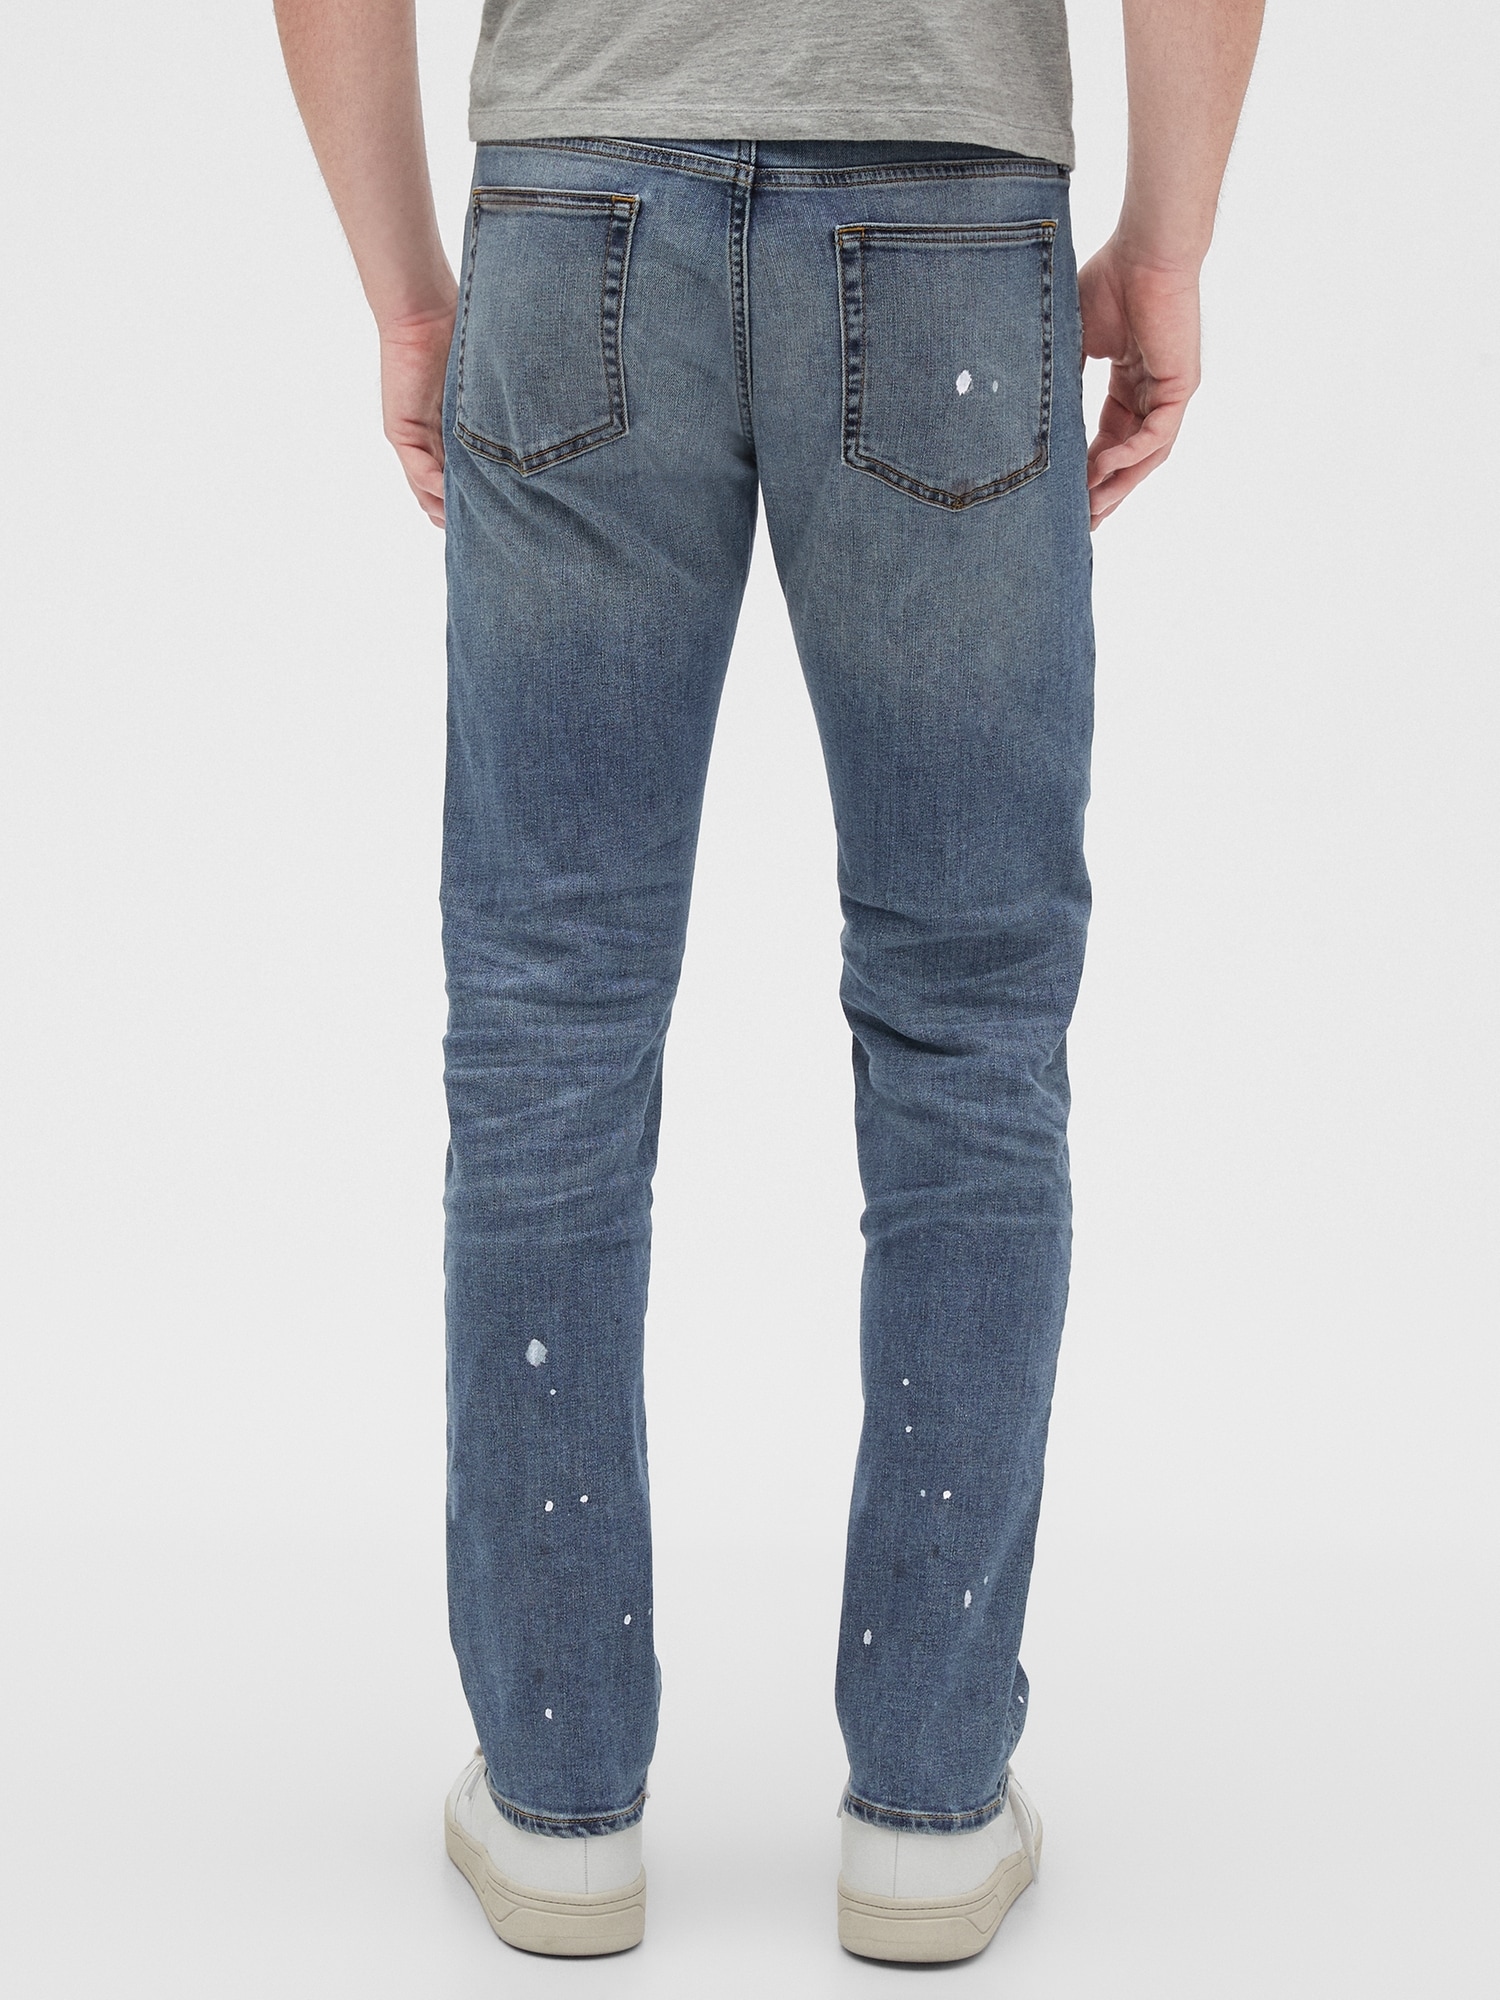 Gap Flex Wearlight Slim Jean Pantolon. 2